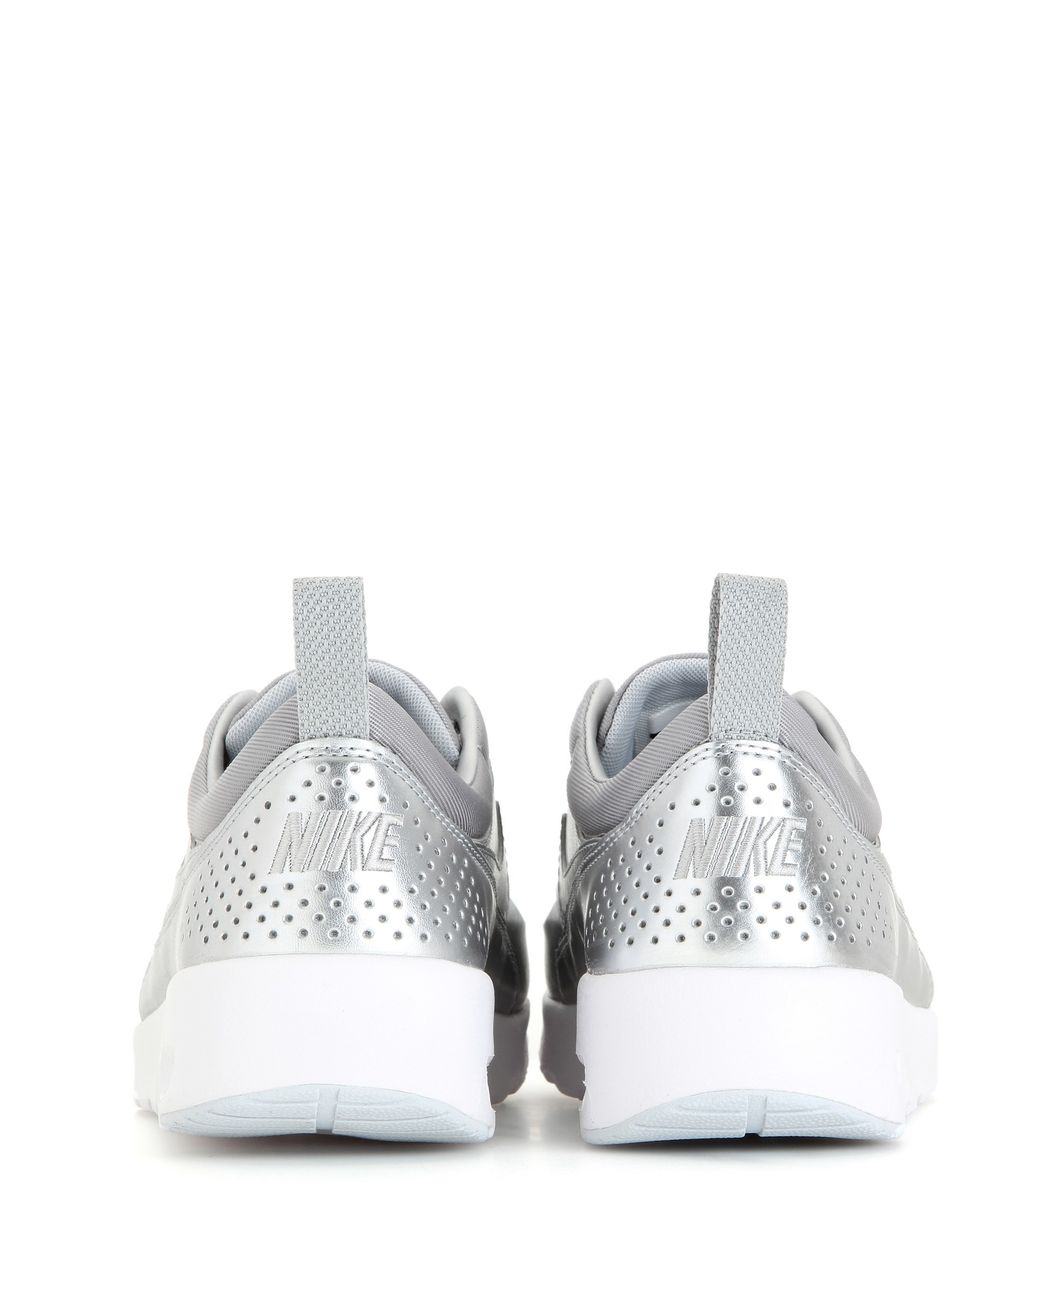 Nike Air Max Thea Metallic Silver Sneakers | Lyst